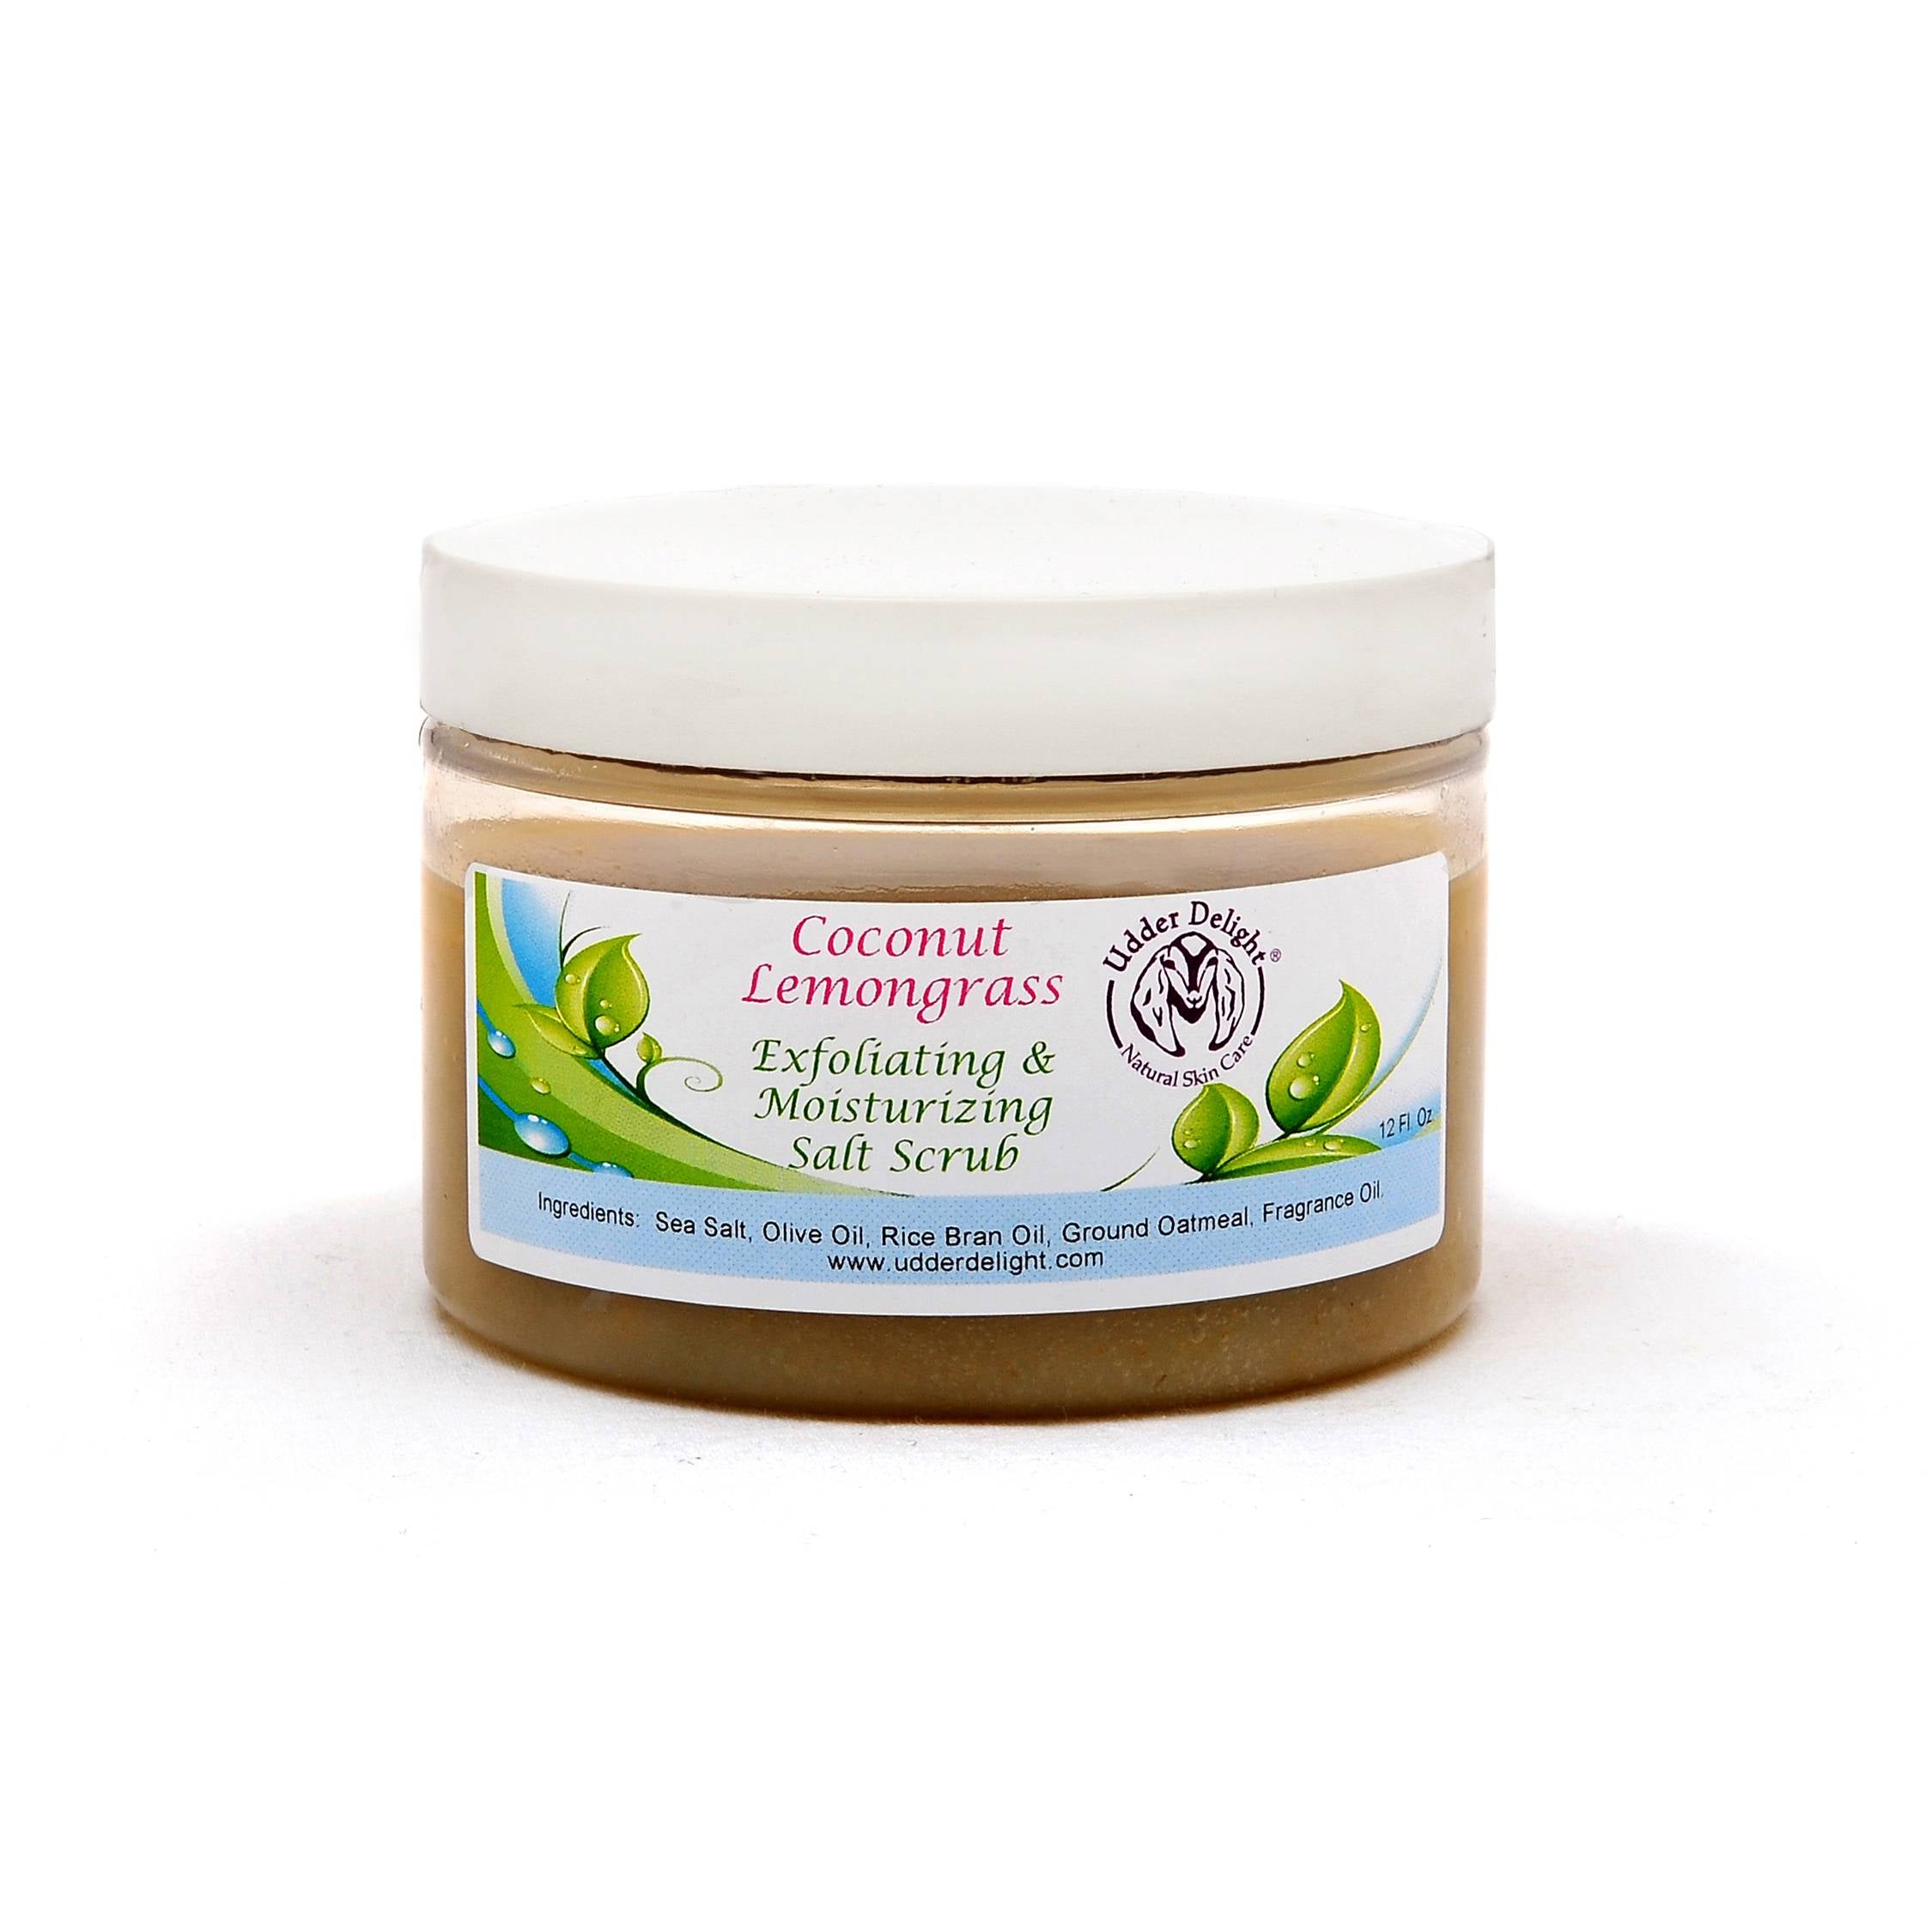 Natural Lemongrass and Coconut Fragrance Oil